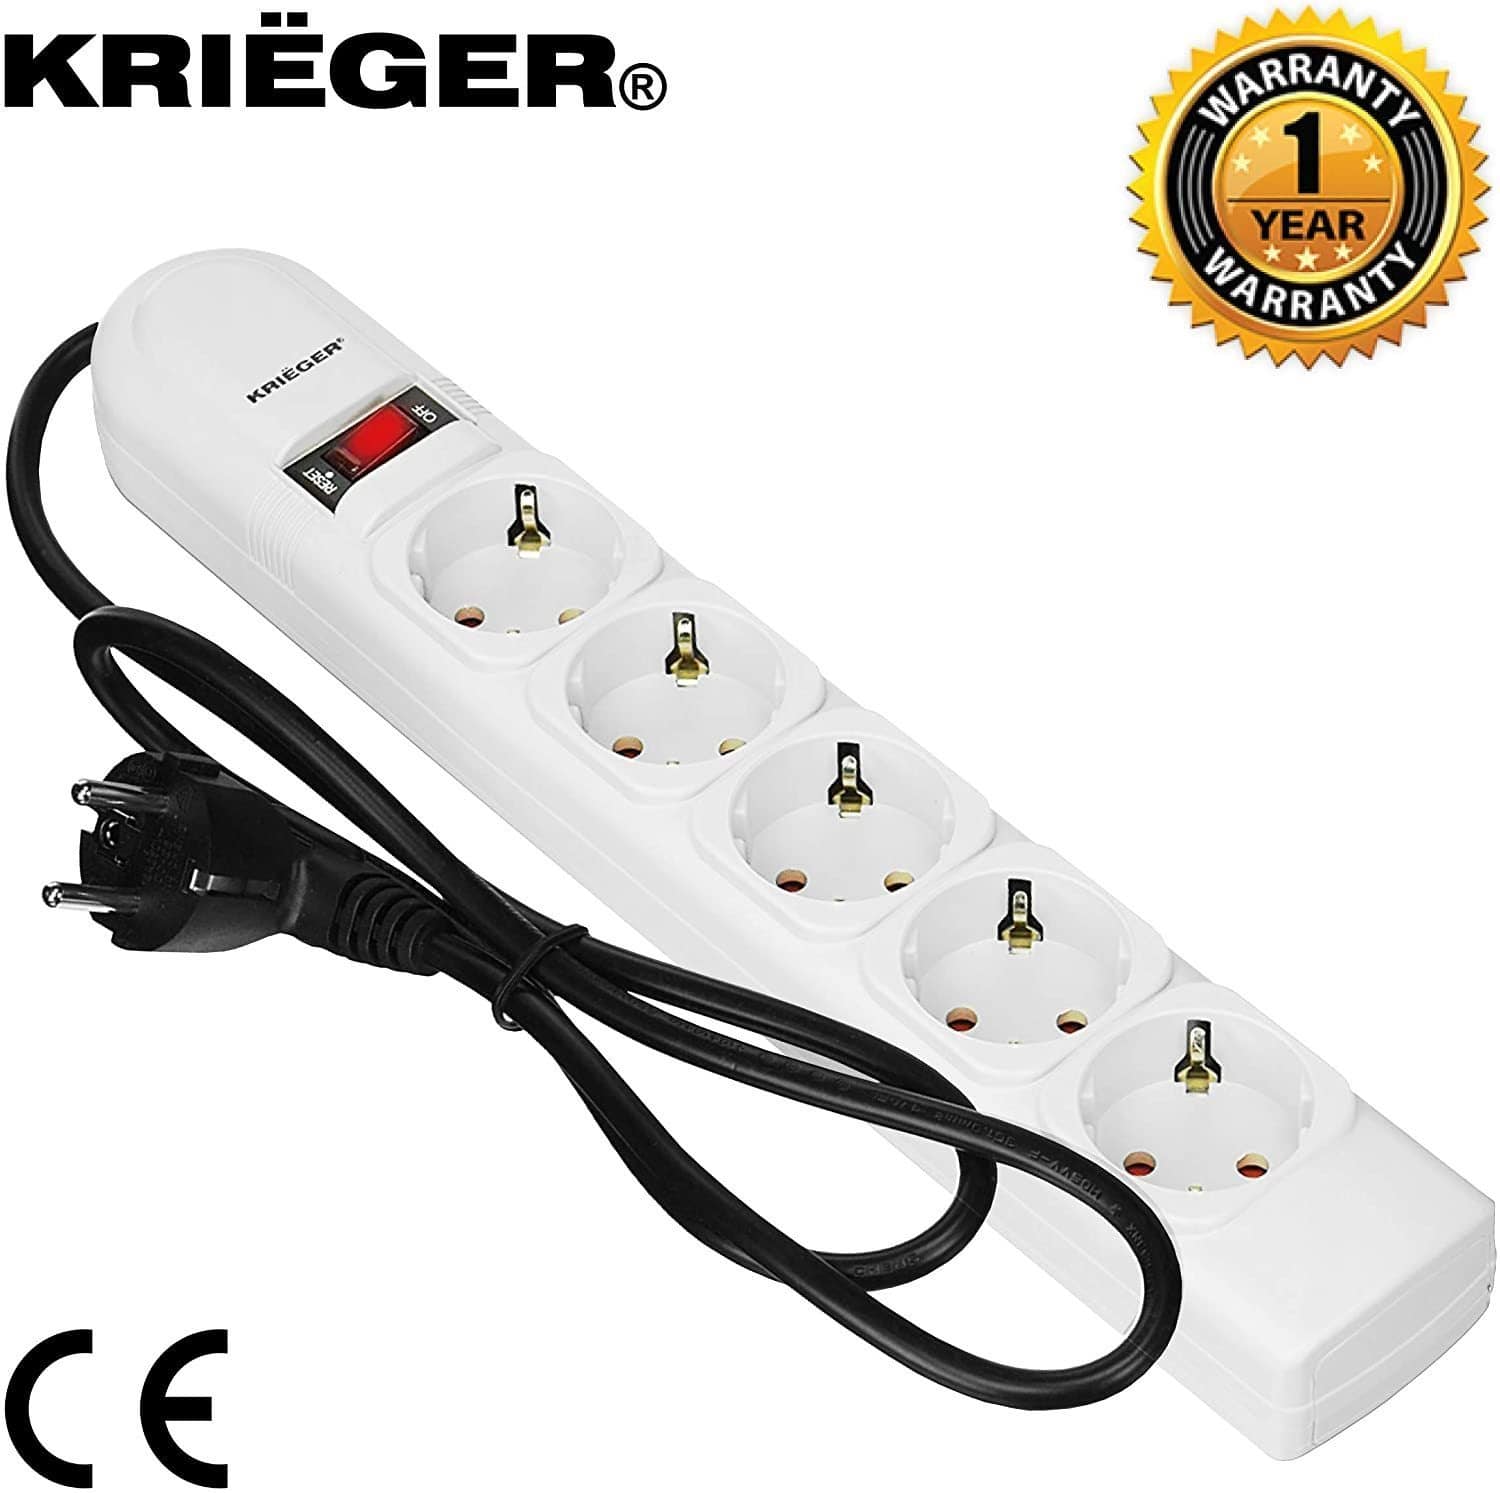 Krieger KR-EUR4, Universal to European Plug Adapter, Type C, 4 Pack